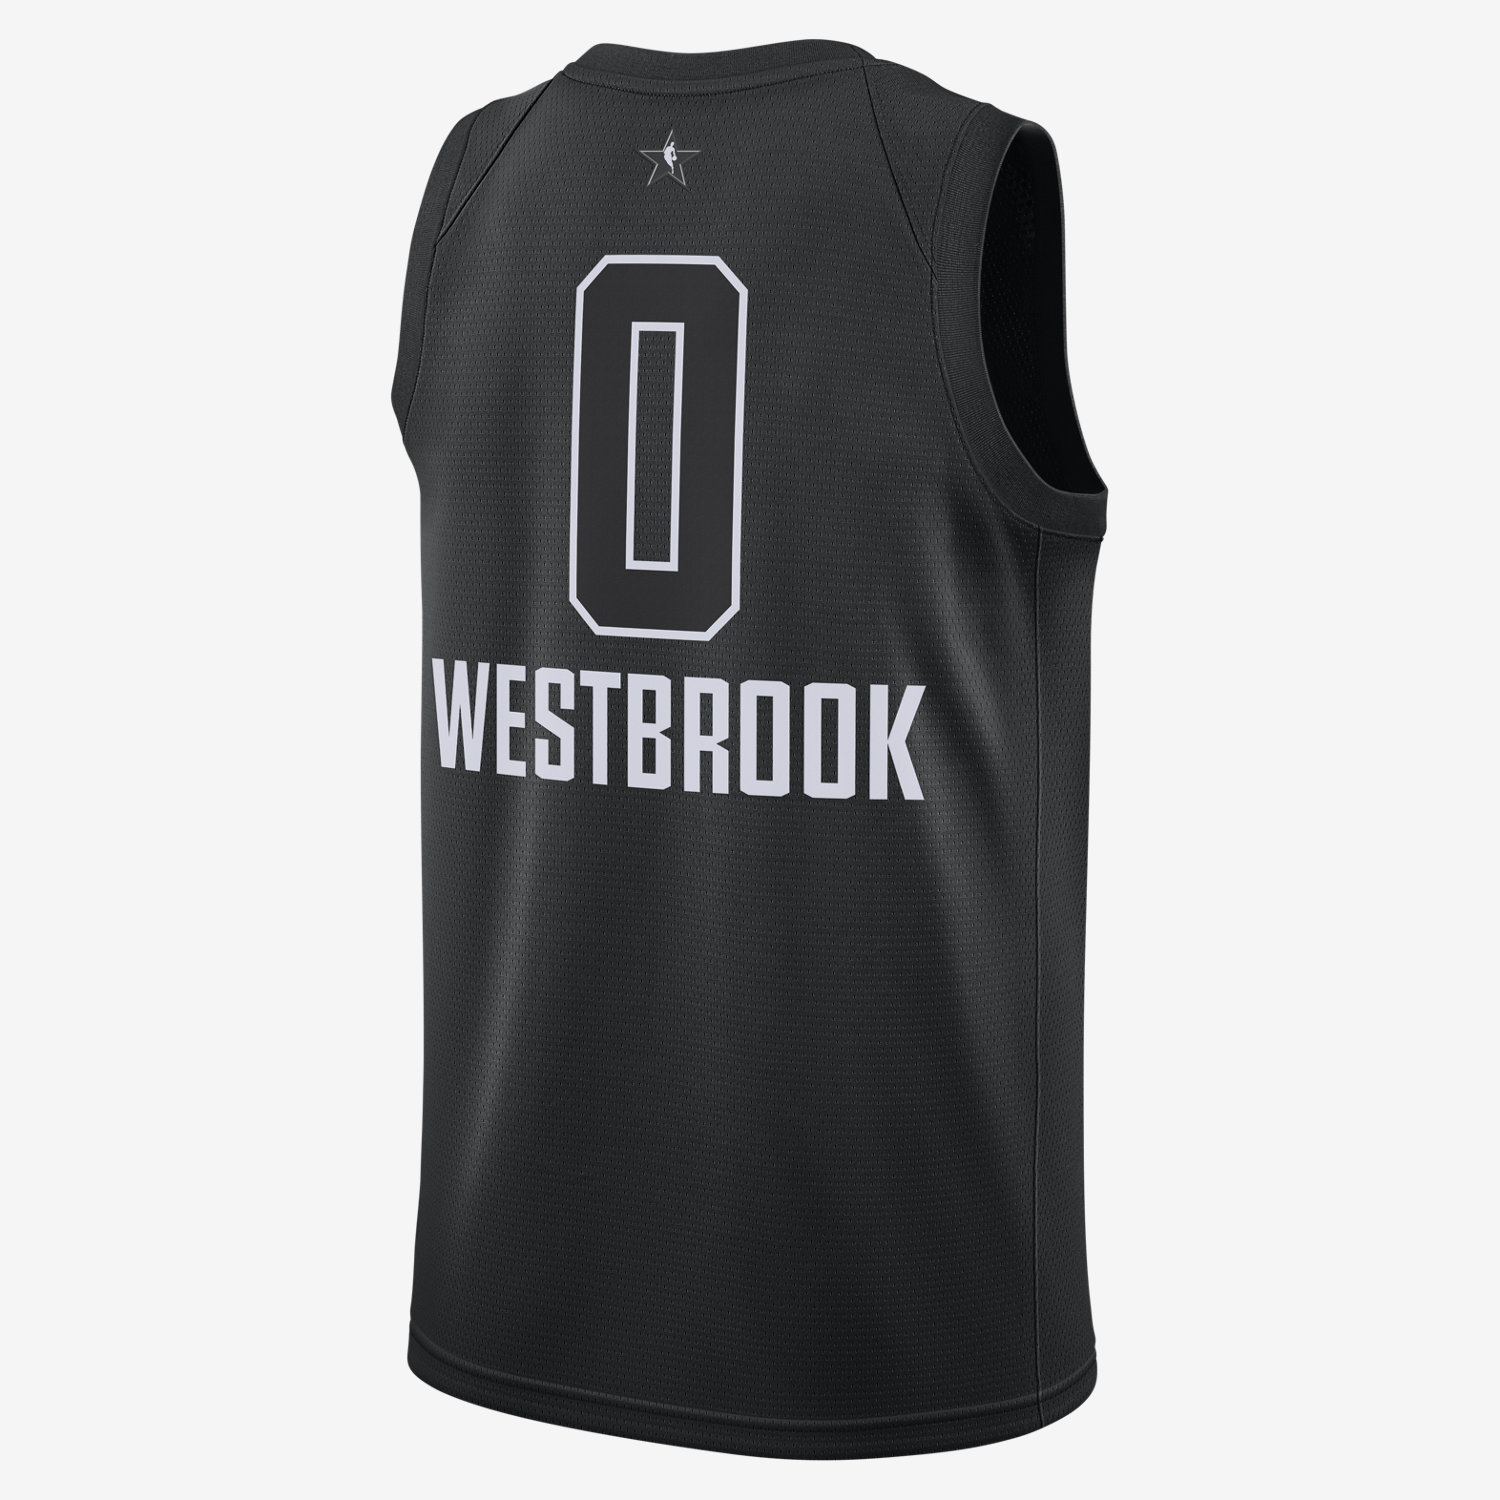 westbrook all star jersey 2018